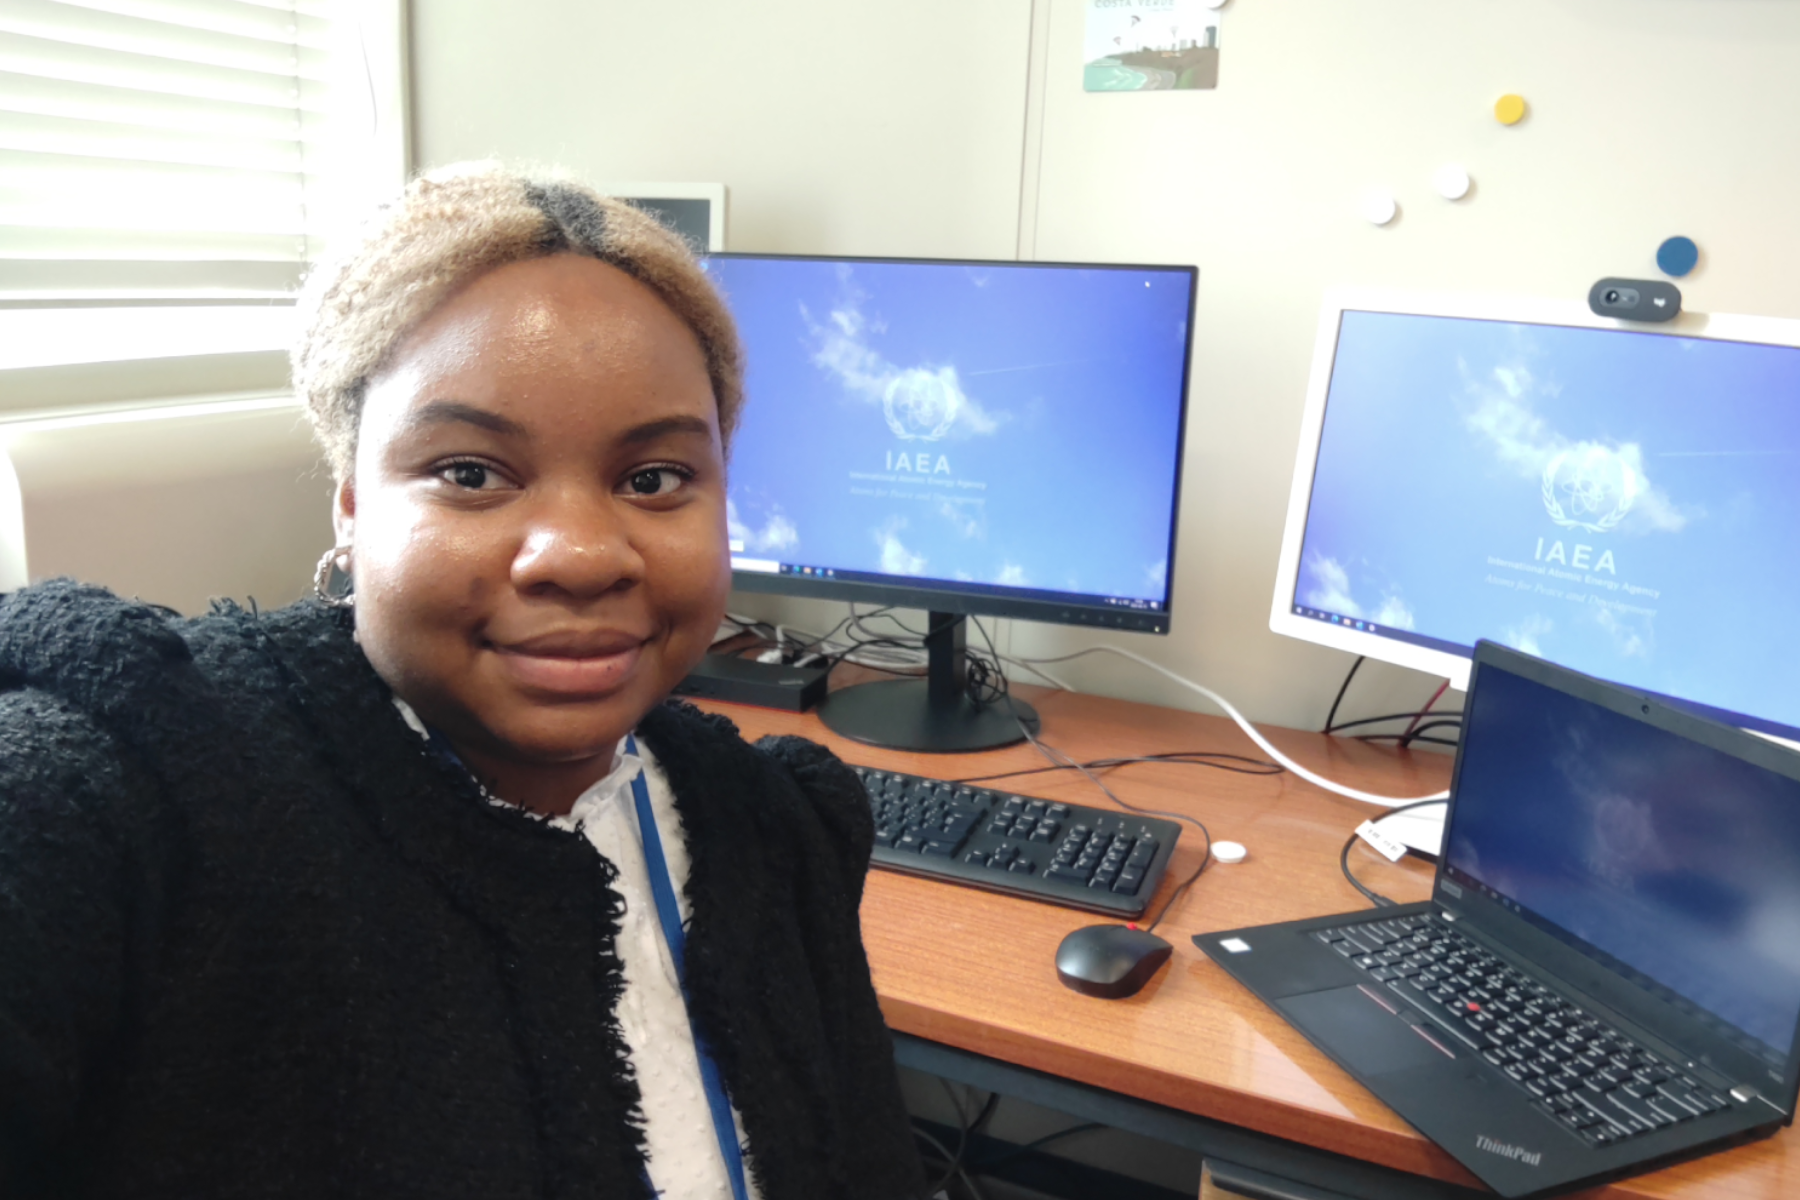 Nkeiru Ubadike, seated at laptop, smiling